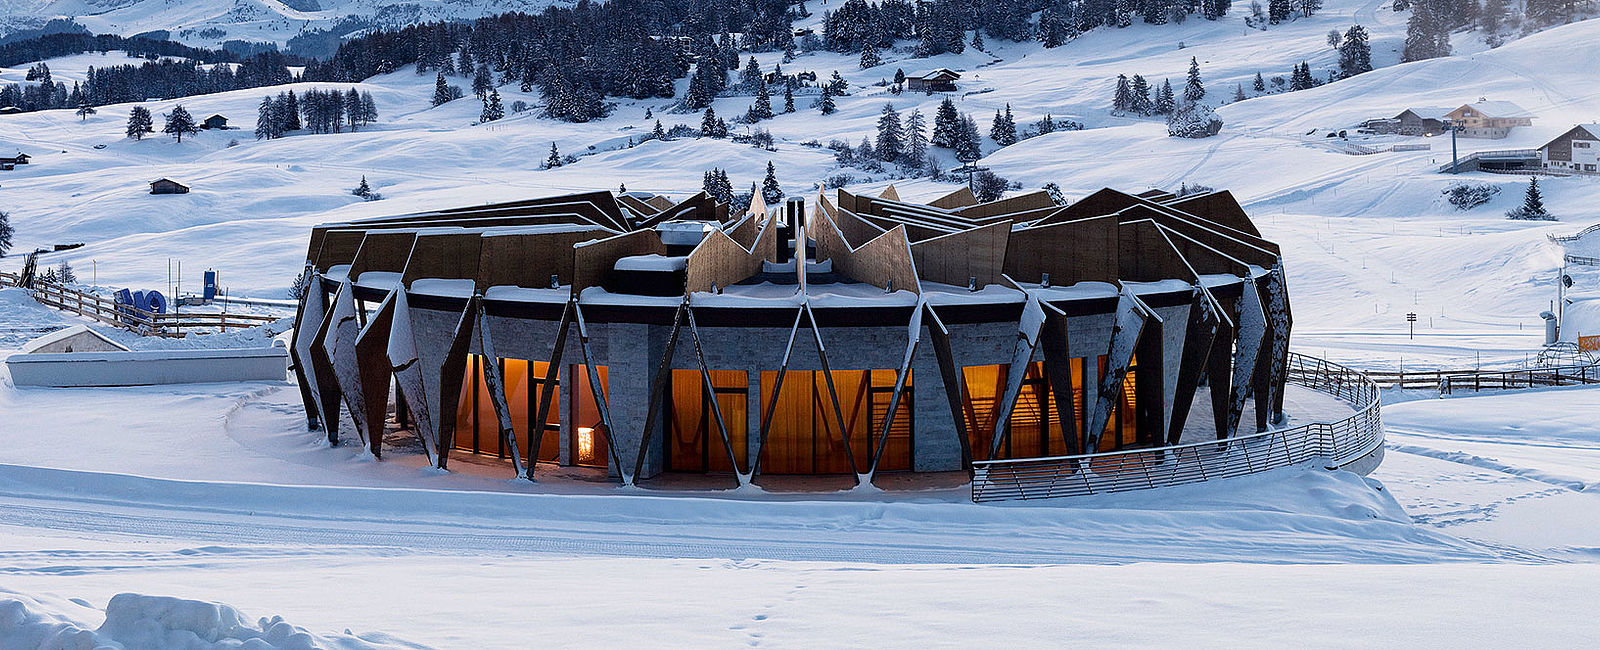 HOTEL ANGEBOTE
 COMO Alpina Dolomites: Familien - Package 
